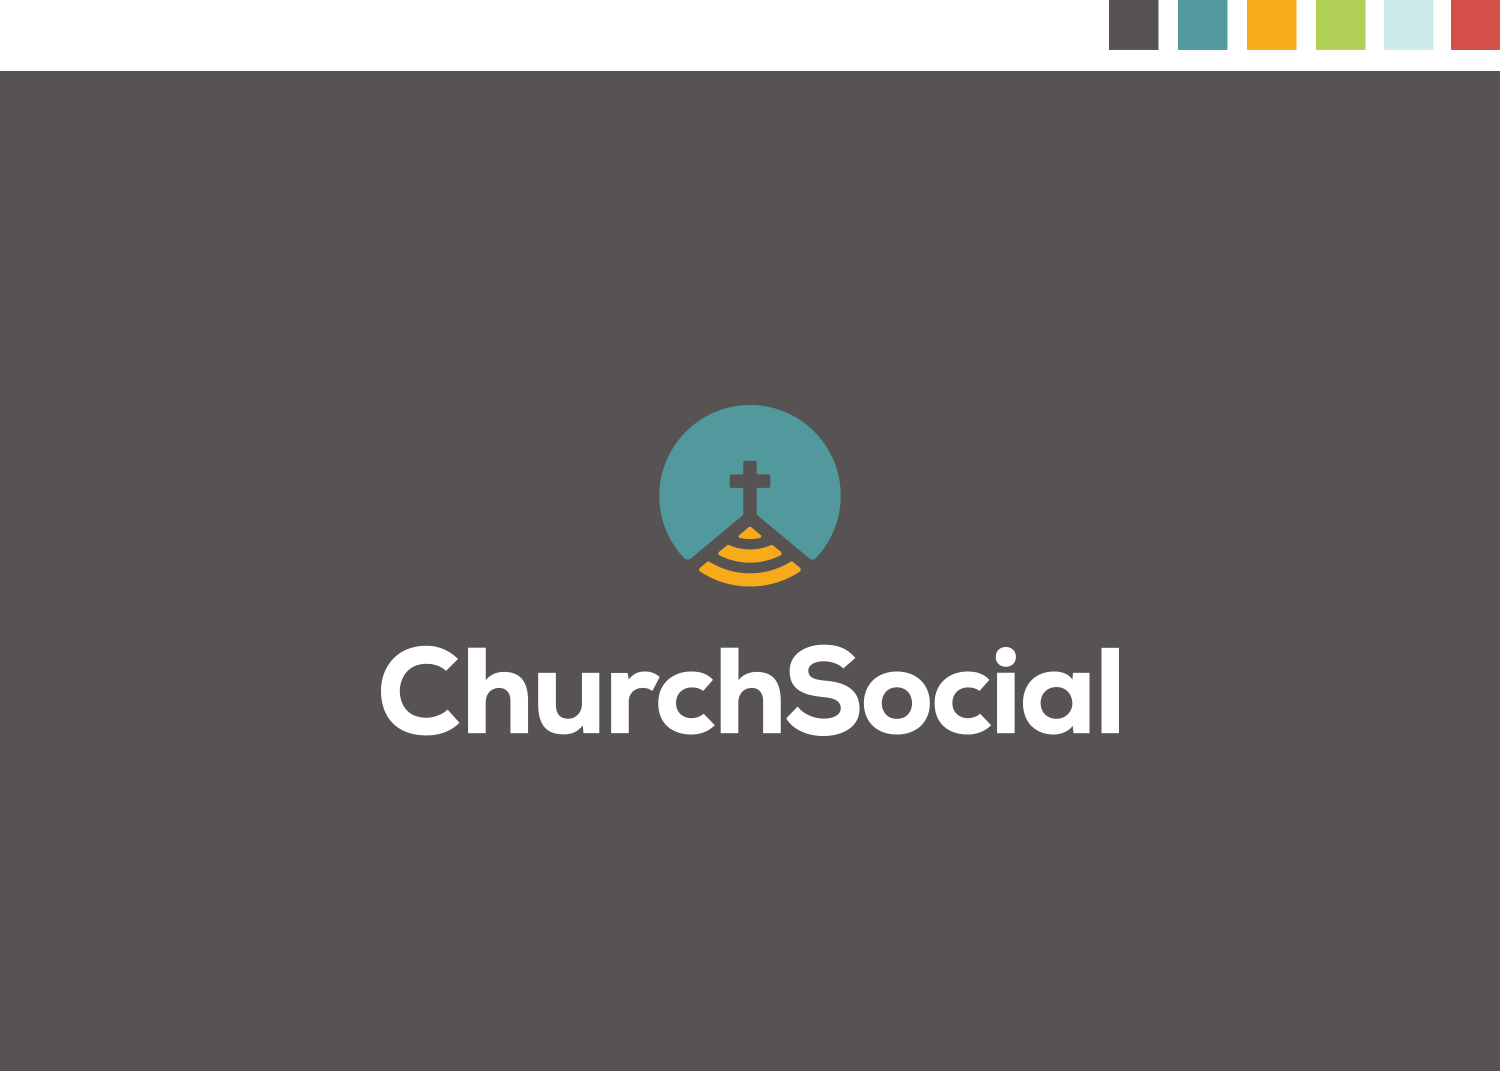 The new Church Social logo